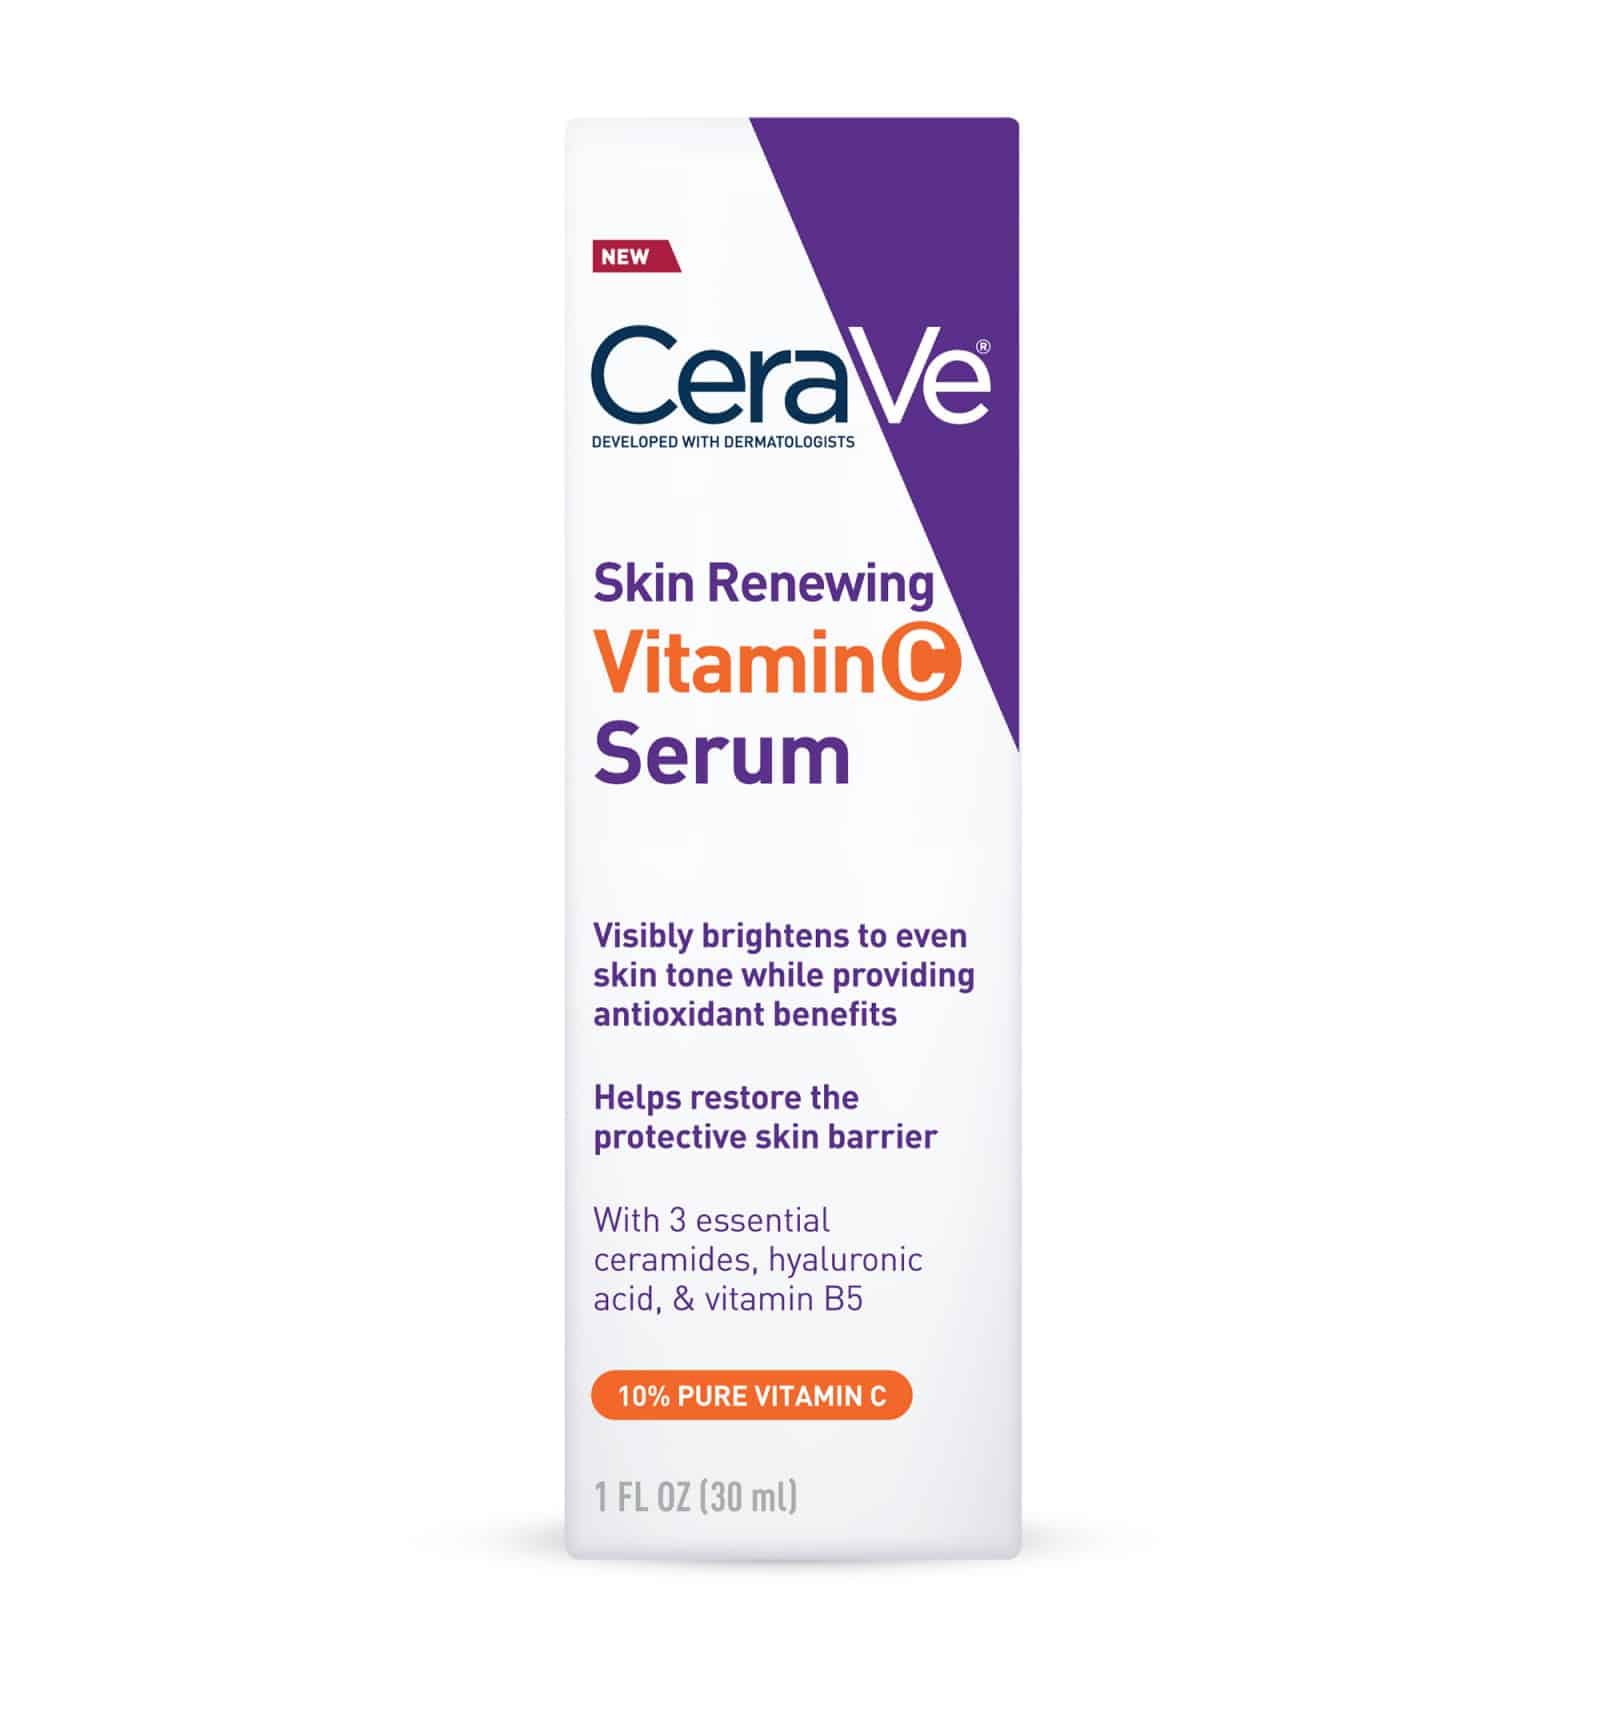 Skin Renewing Vitamin C Serum